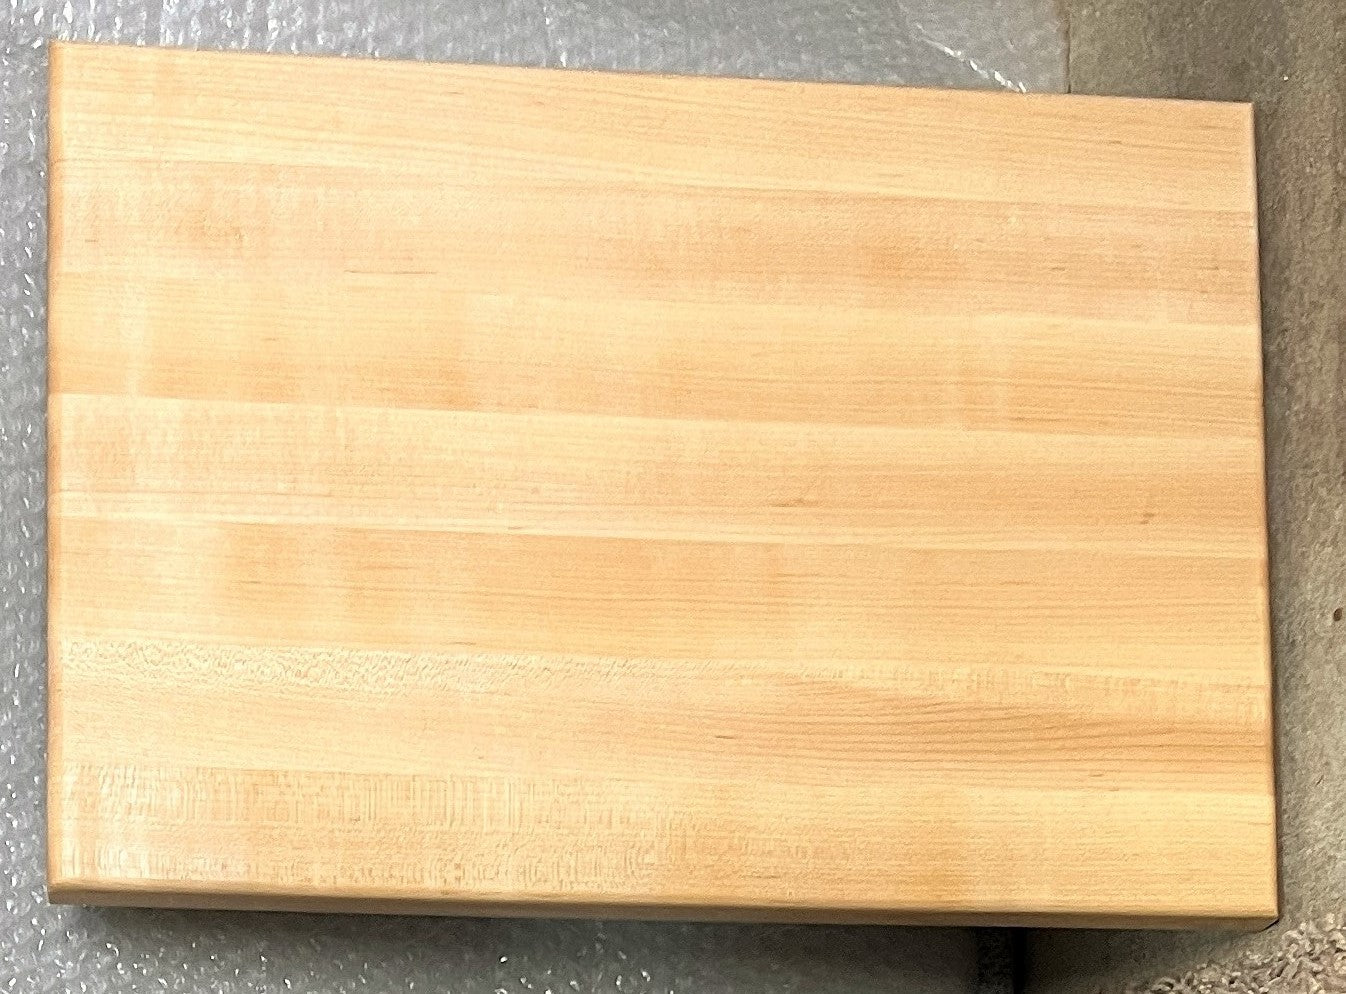 Edge Grain Cutting Board - Classic Maple